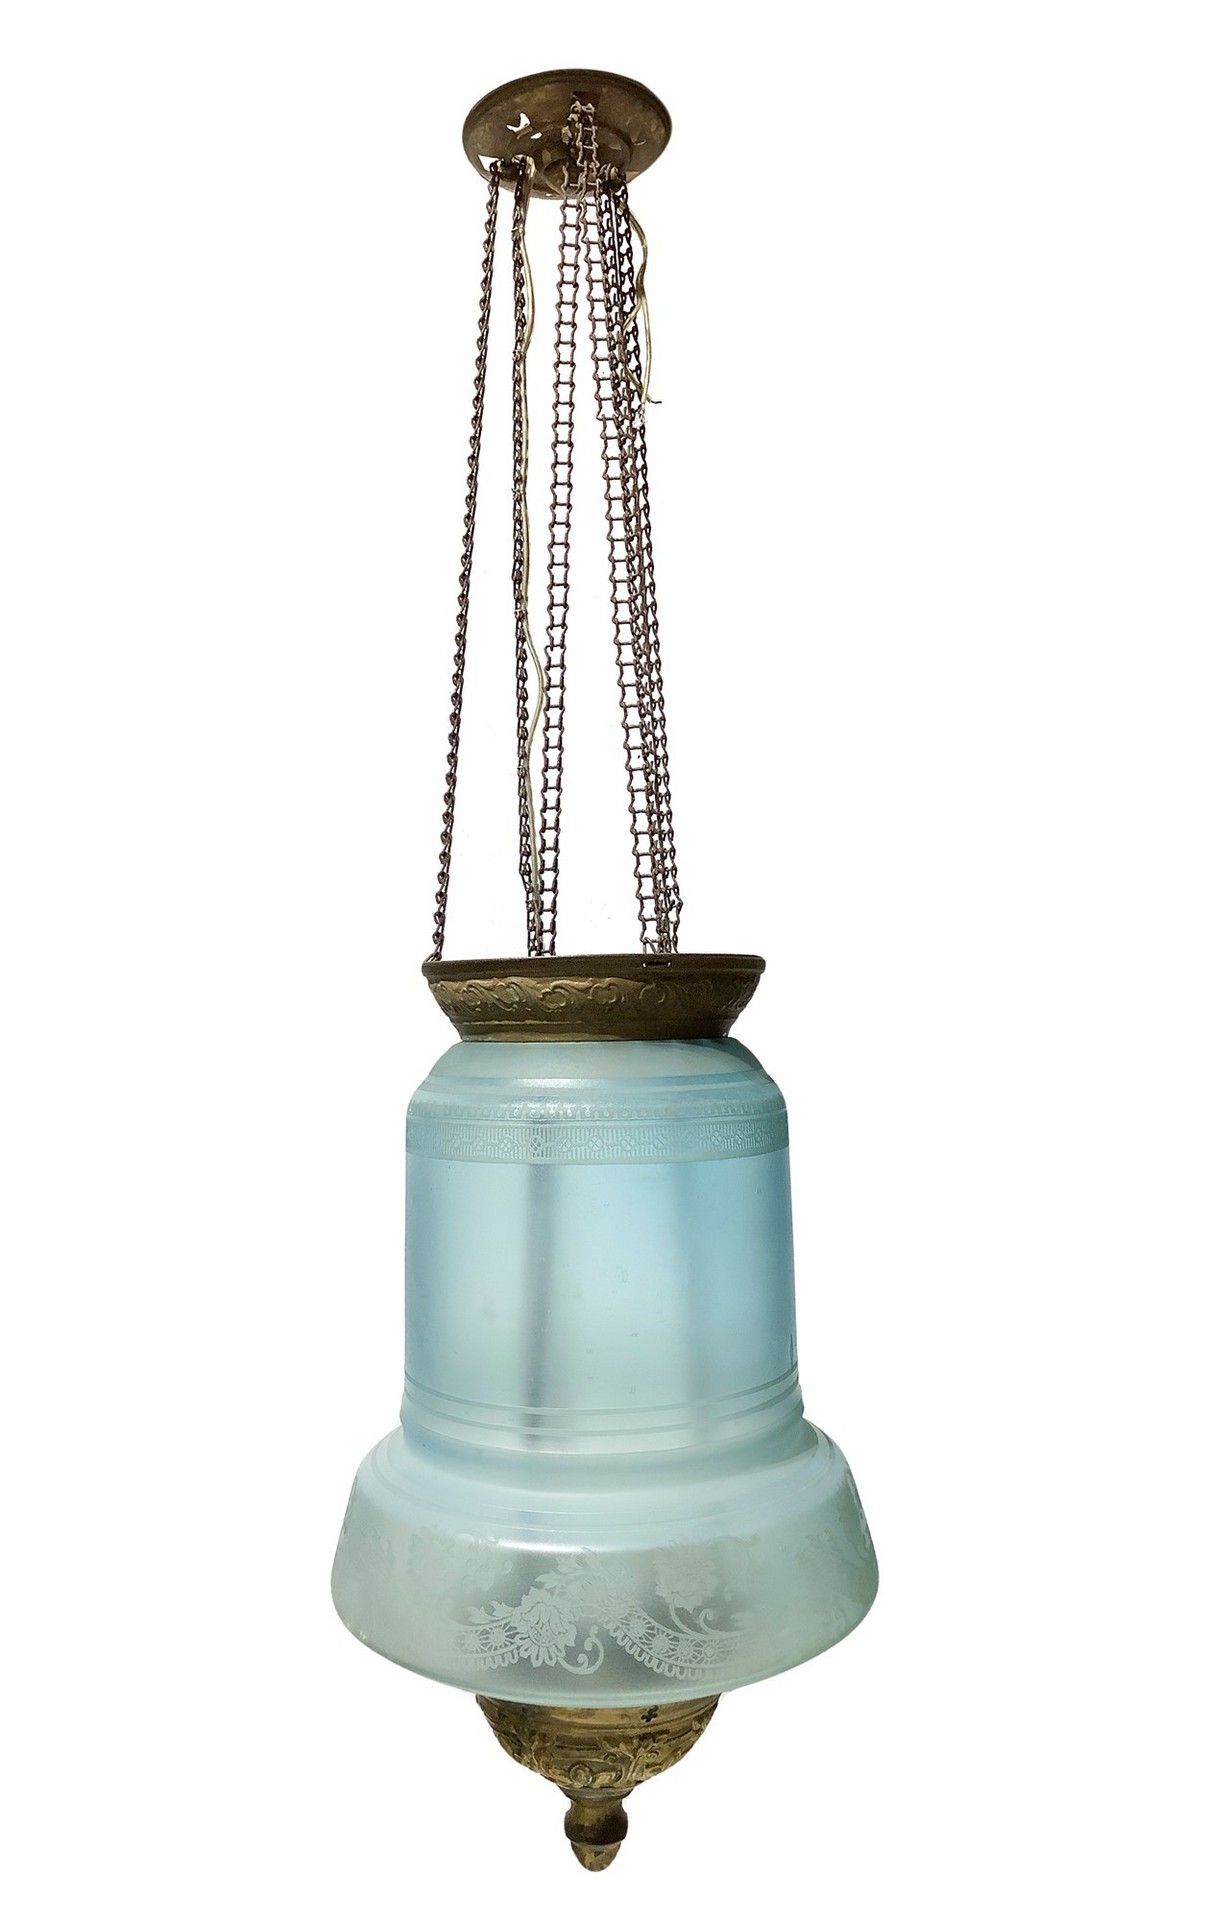 Null Lampe aus Messing und blauem Glas, Anfang 20. Jahrhundert H cm 70x25